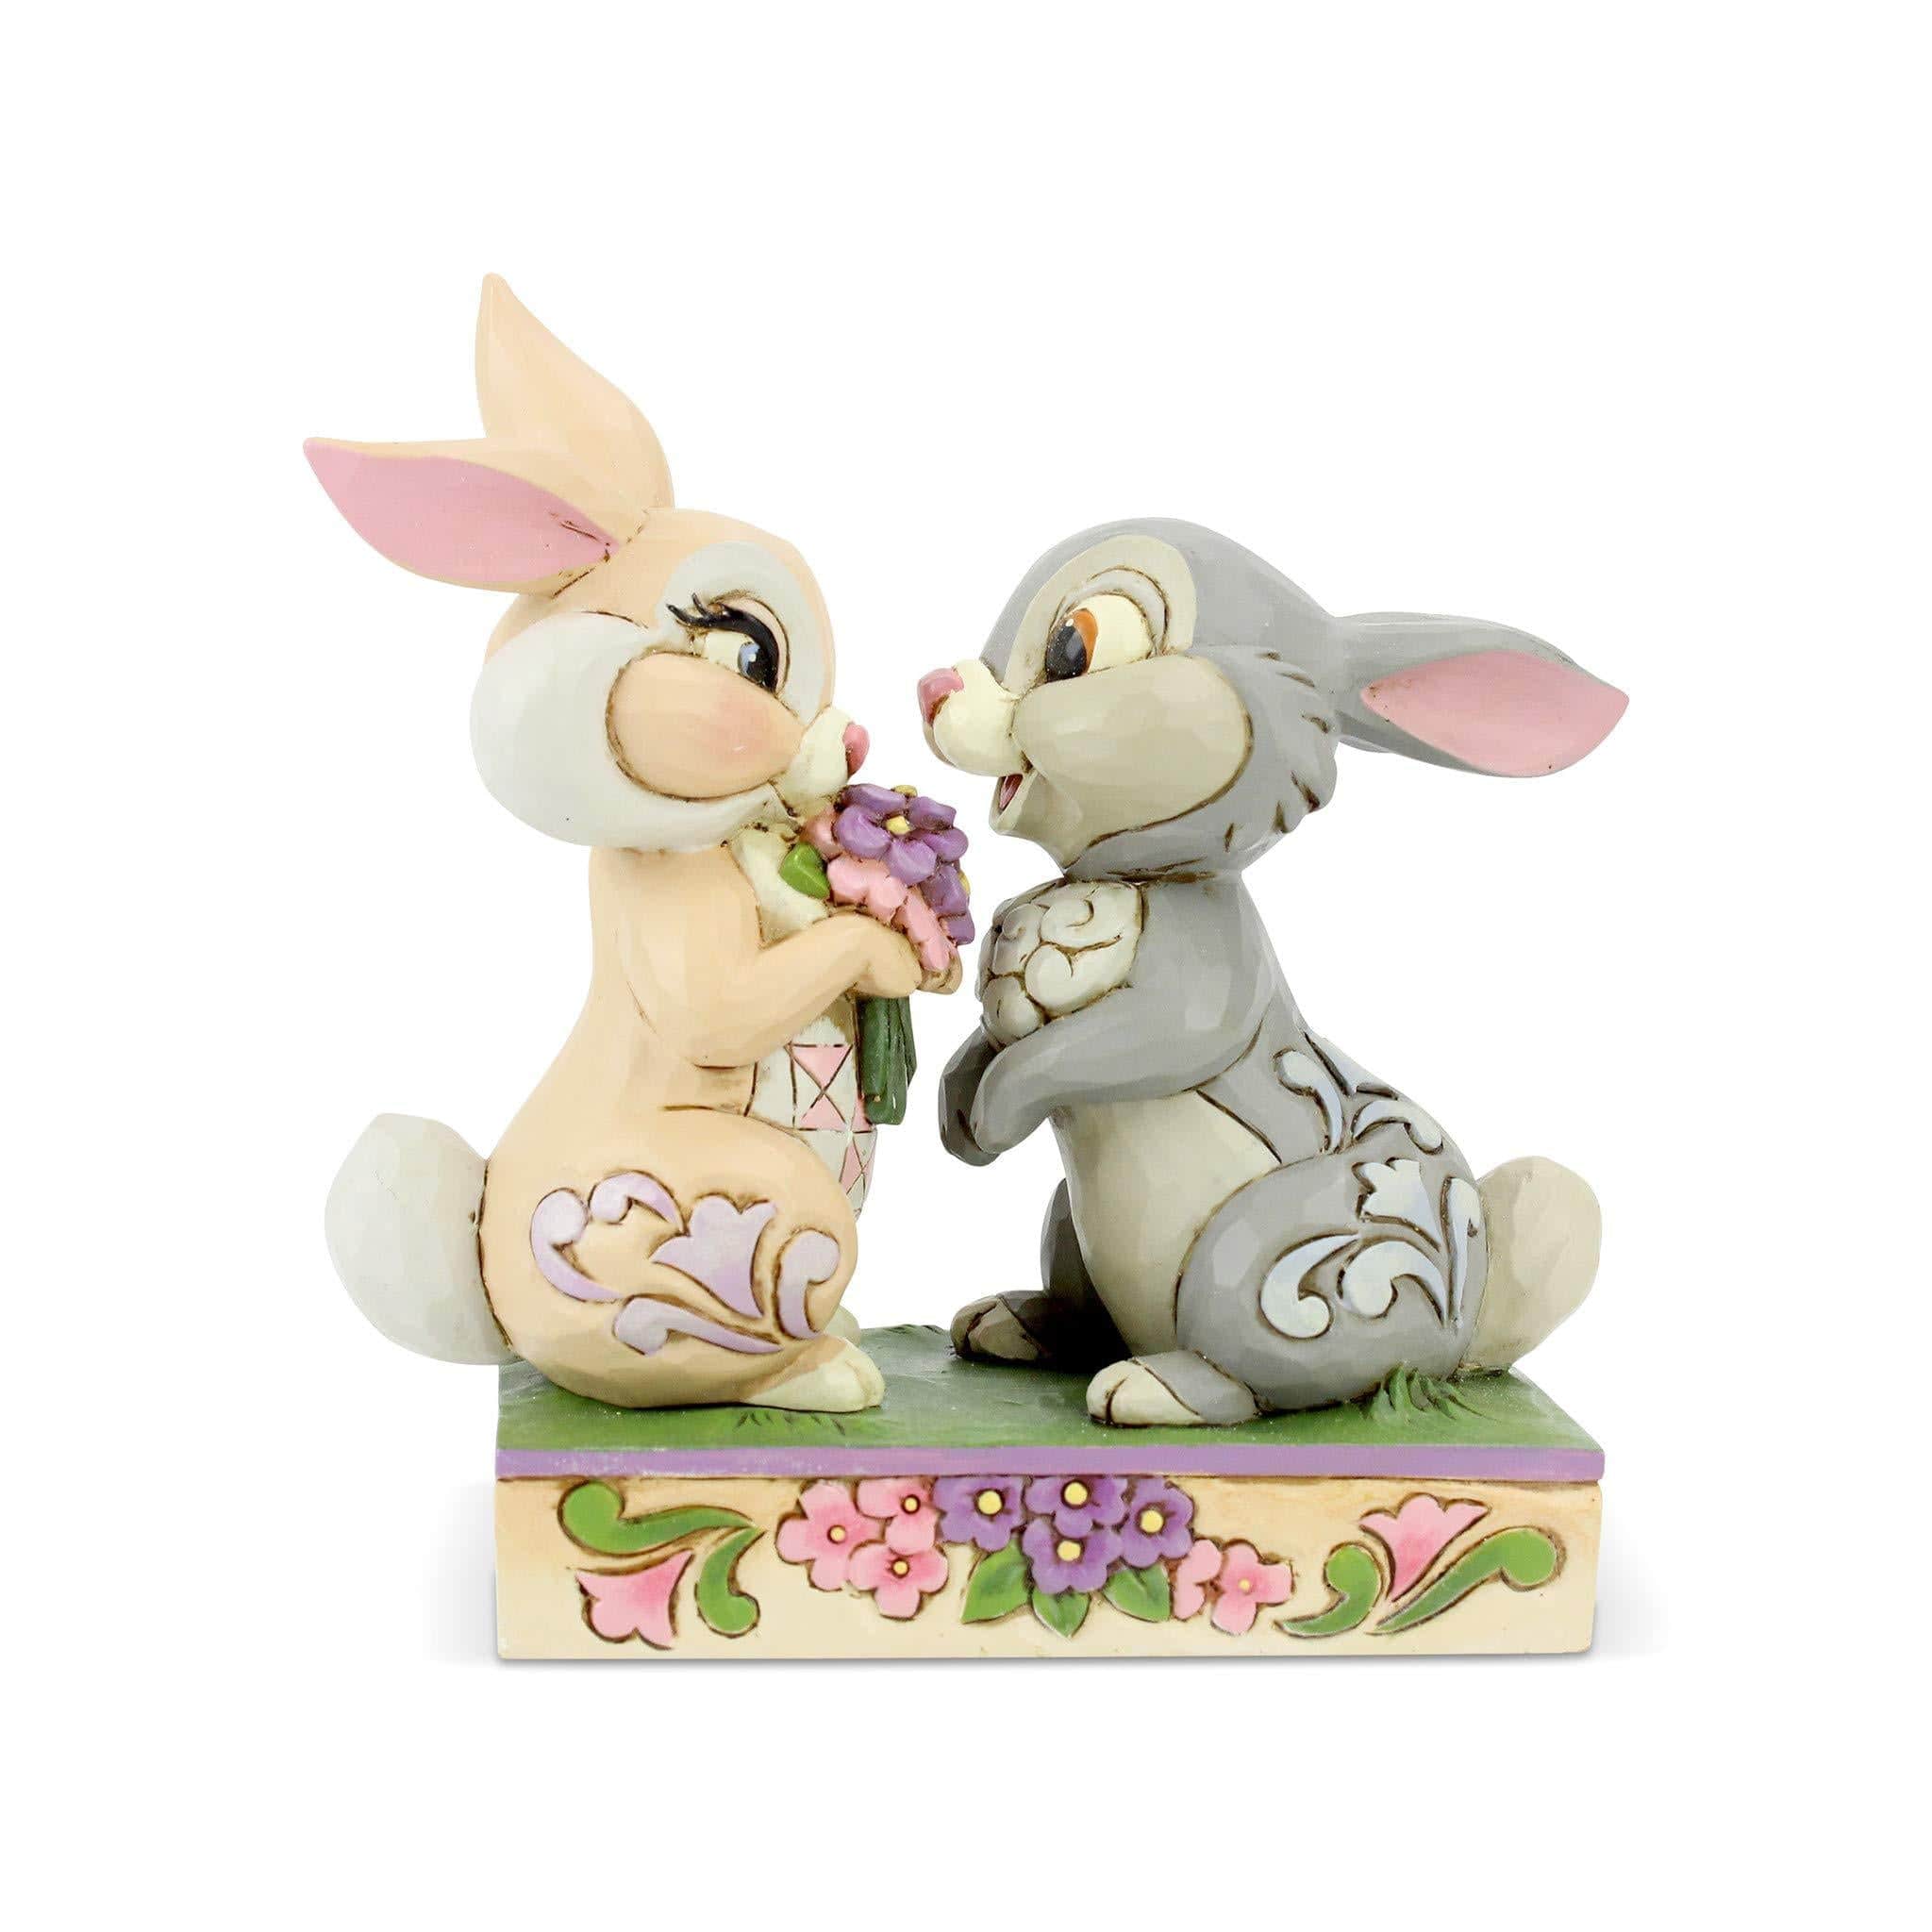 Enesco Disney Ornament Disney Traditions Figurine - Bunny Bouquet (Thumper and Blossom Figurine)